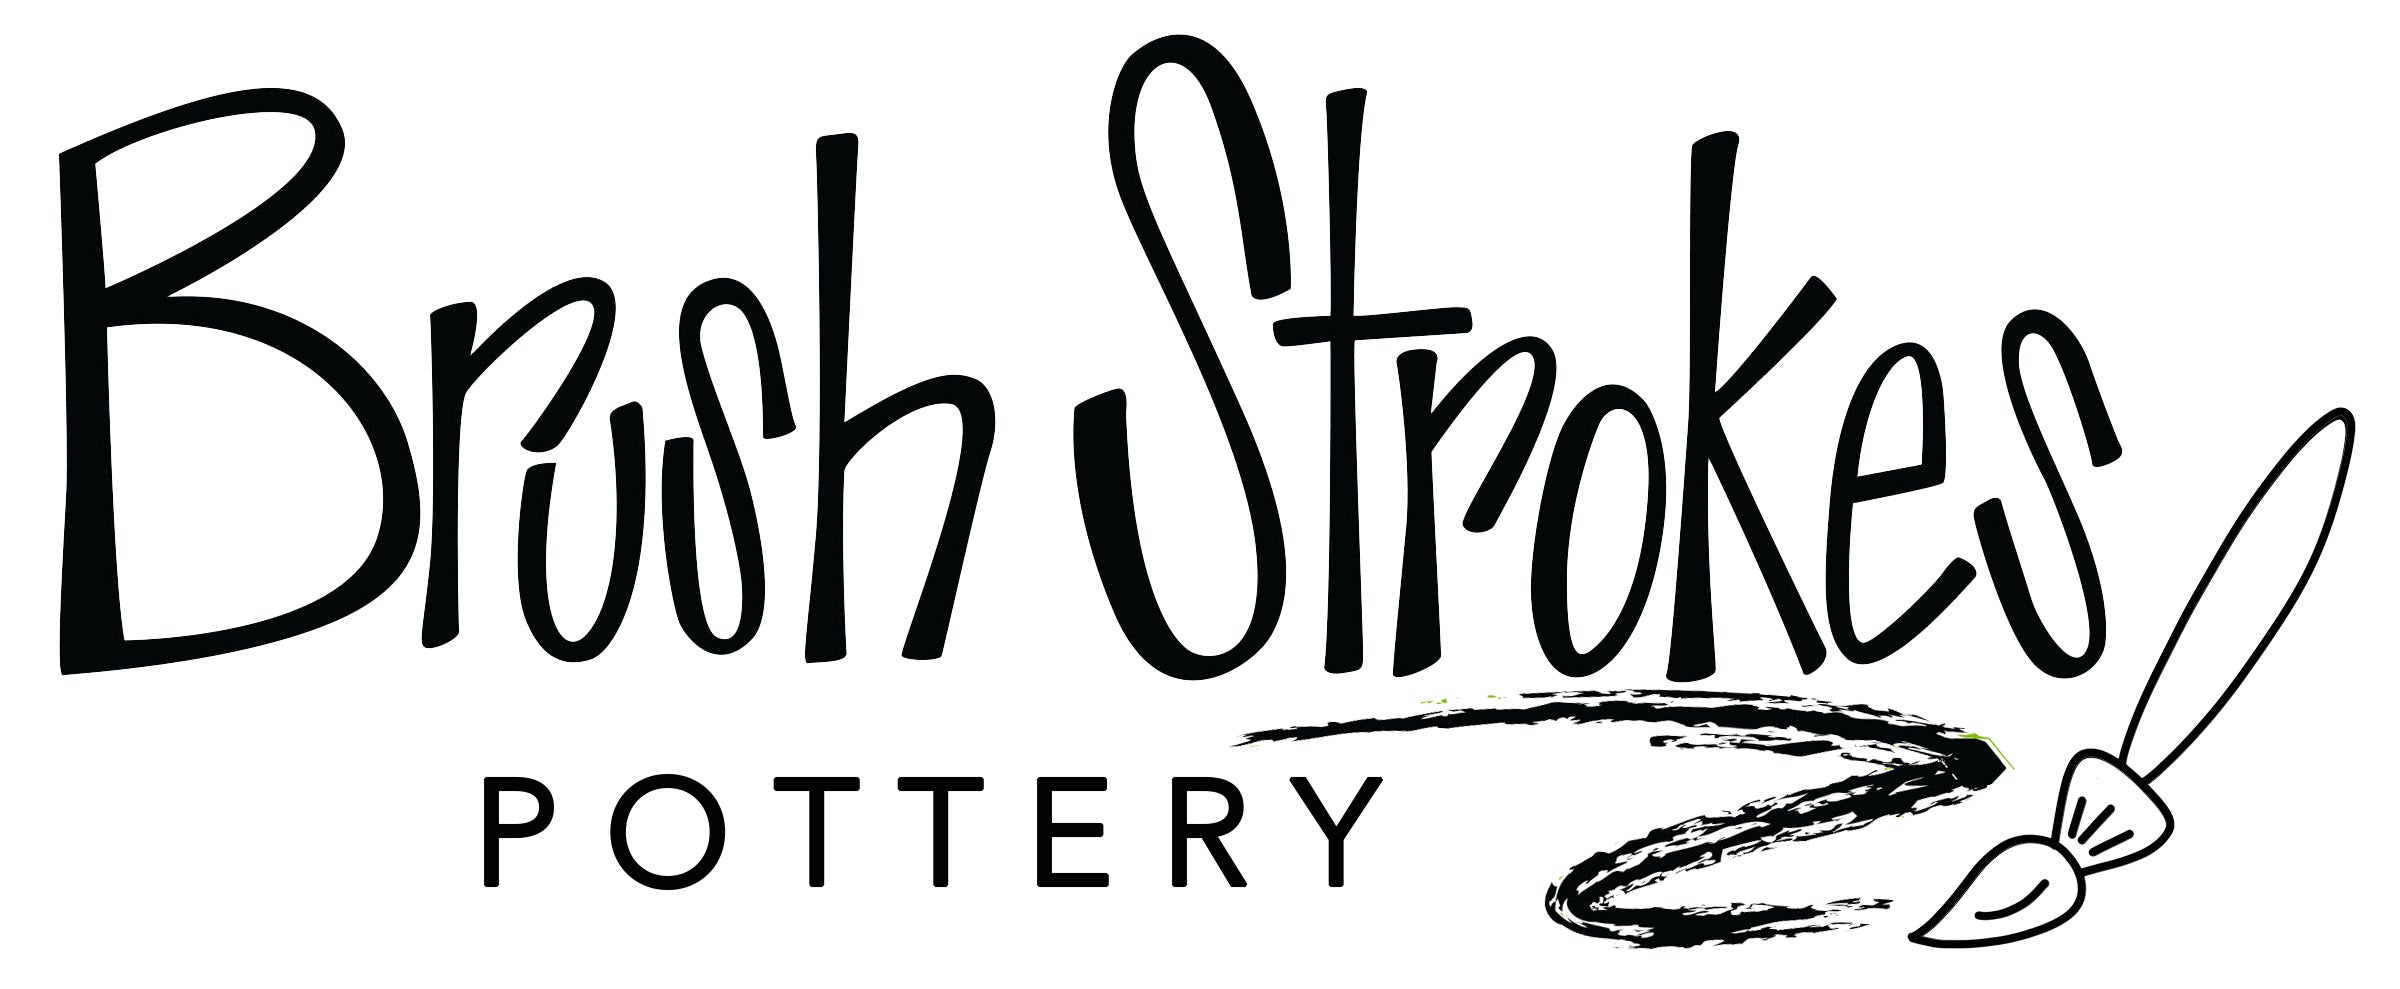 Brush Stroke Oyster Stroke – Porslim